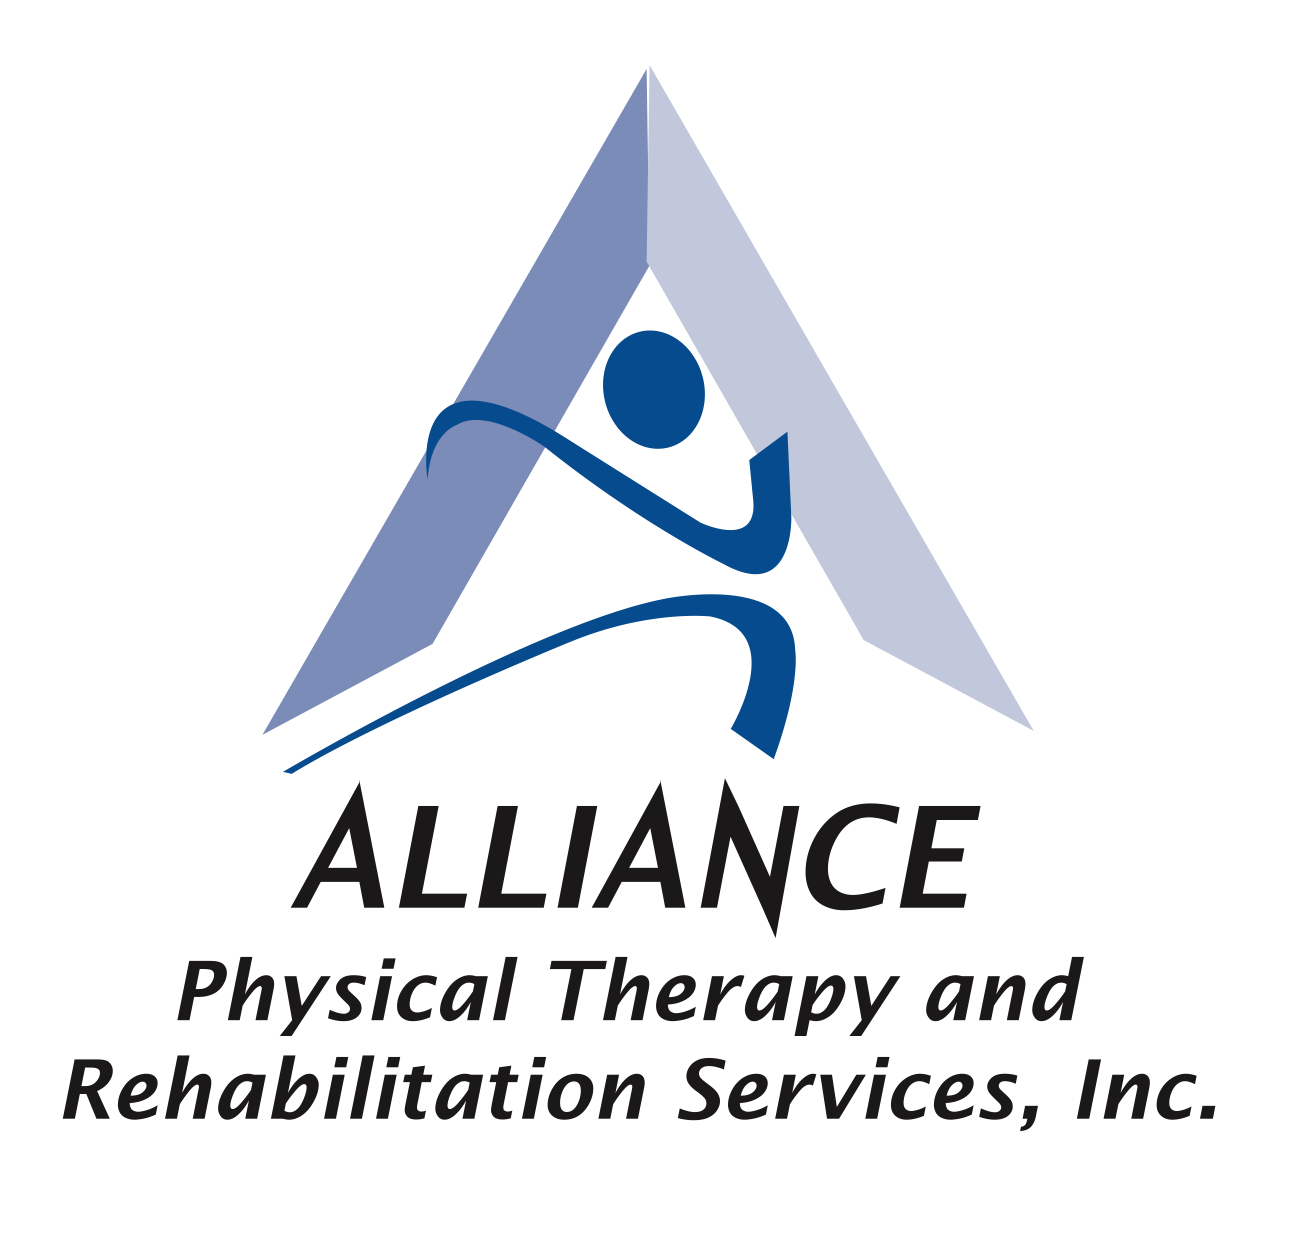 Alliance Physical Therapy - Penn Hills 324 Rodi Rd, Penn Hills Pennsylvania 15235